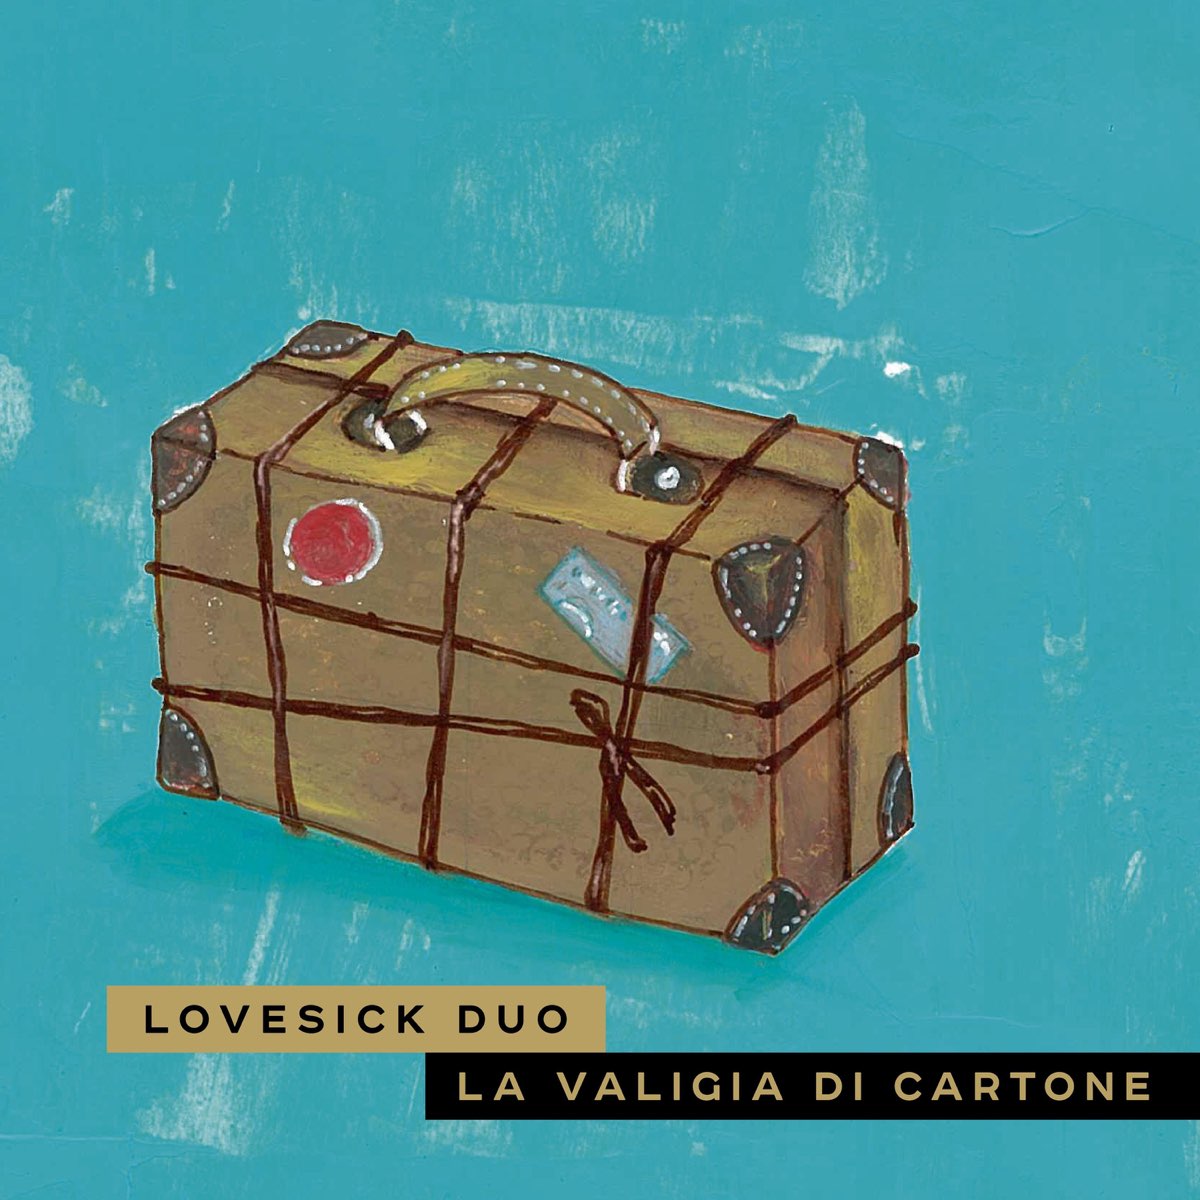 La Valigia Di Cartone - Album by Lovesick Duo - Apple Music